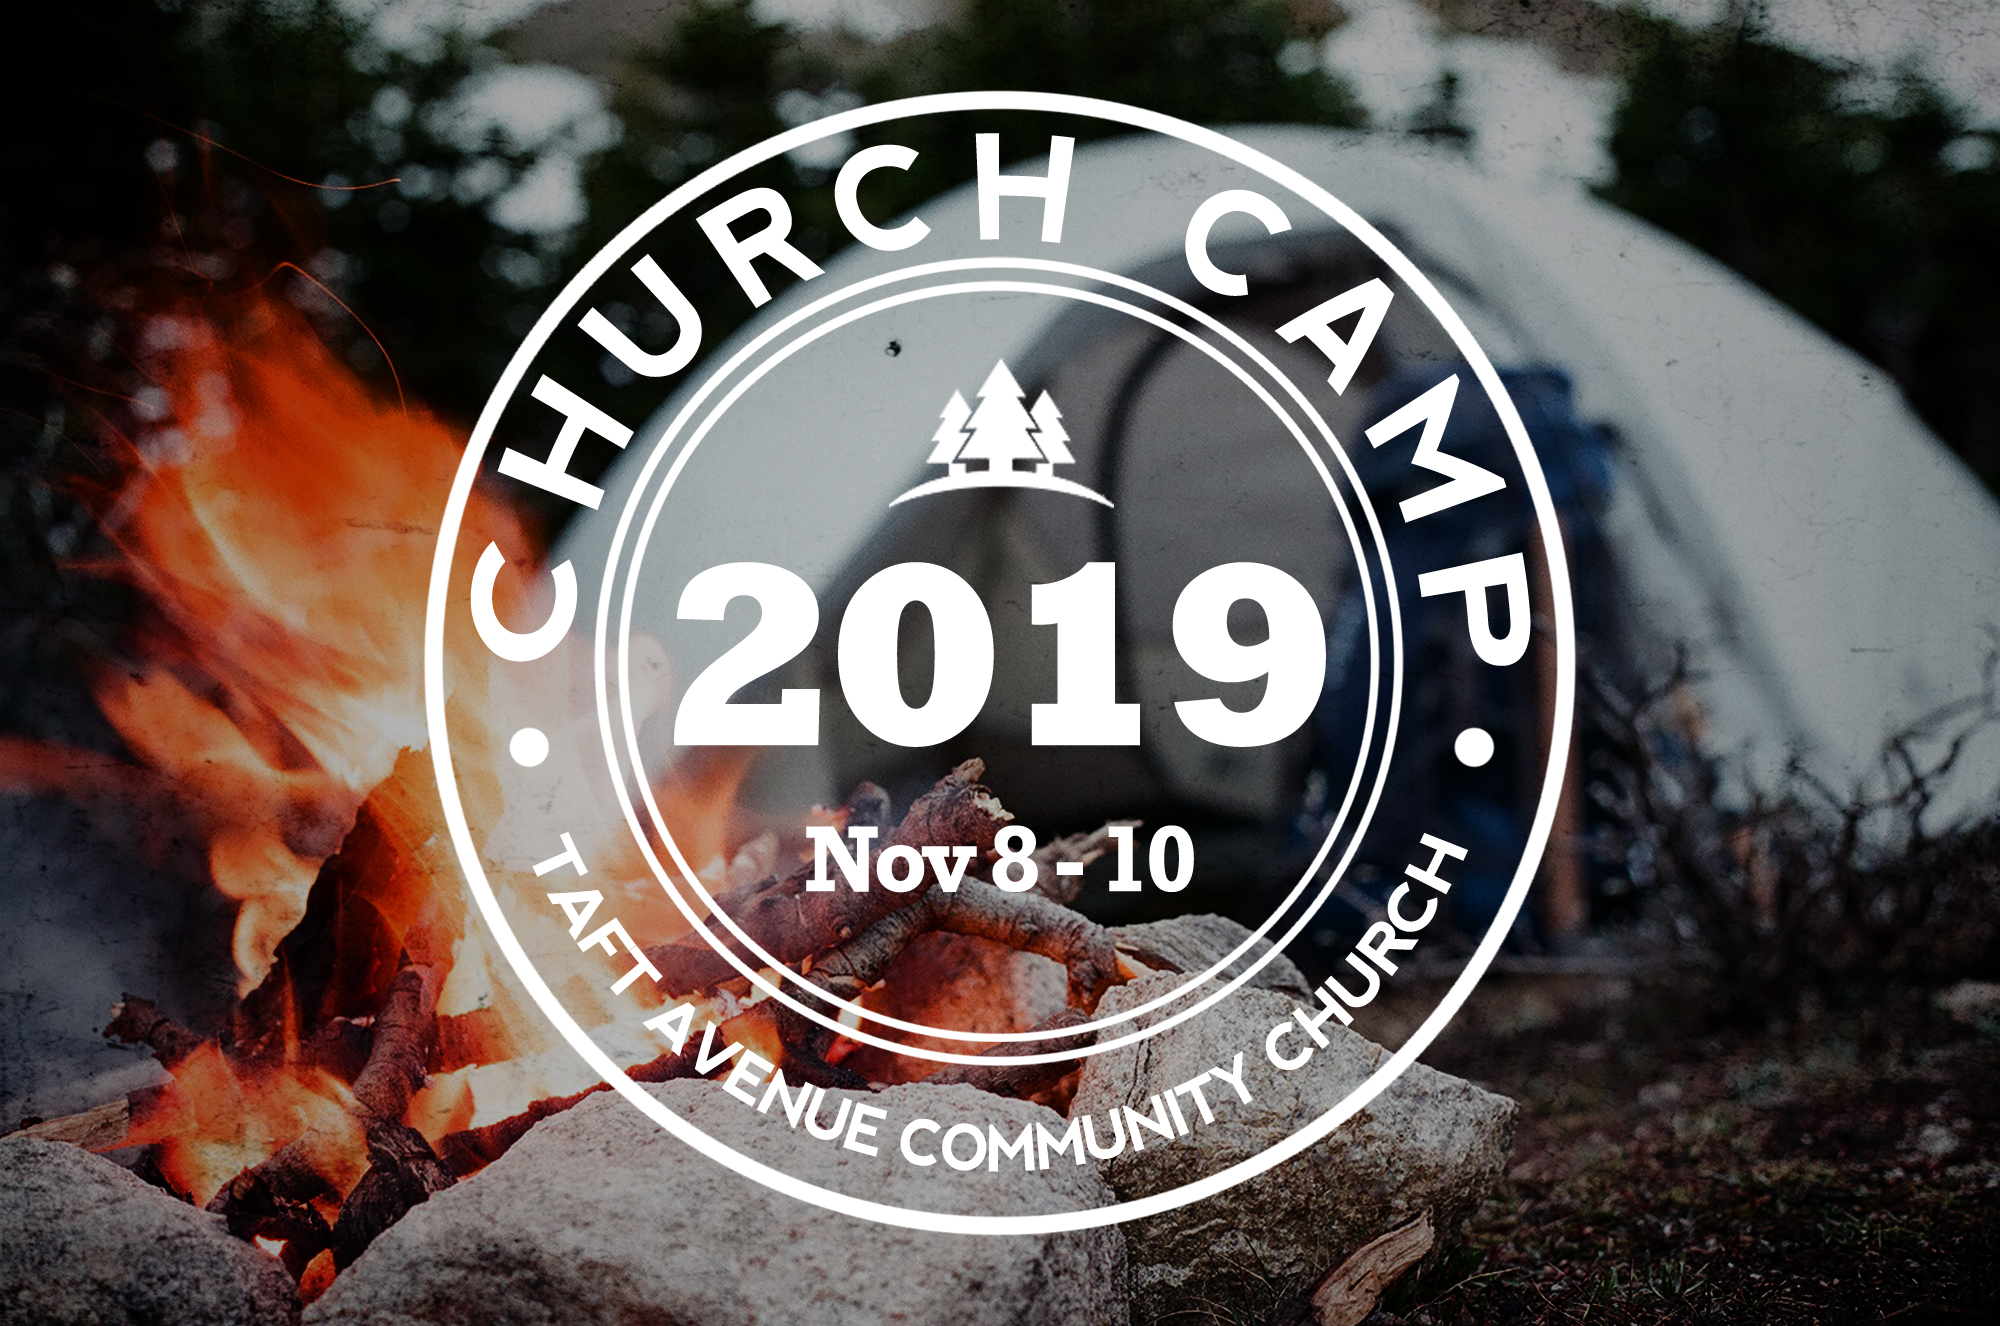 Church Camp 2019 NOV